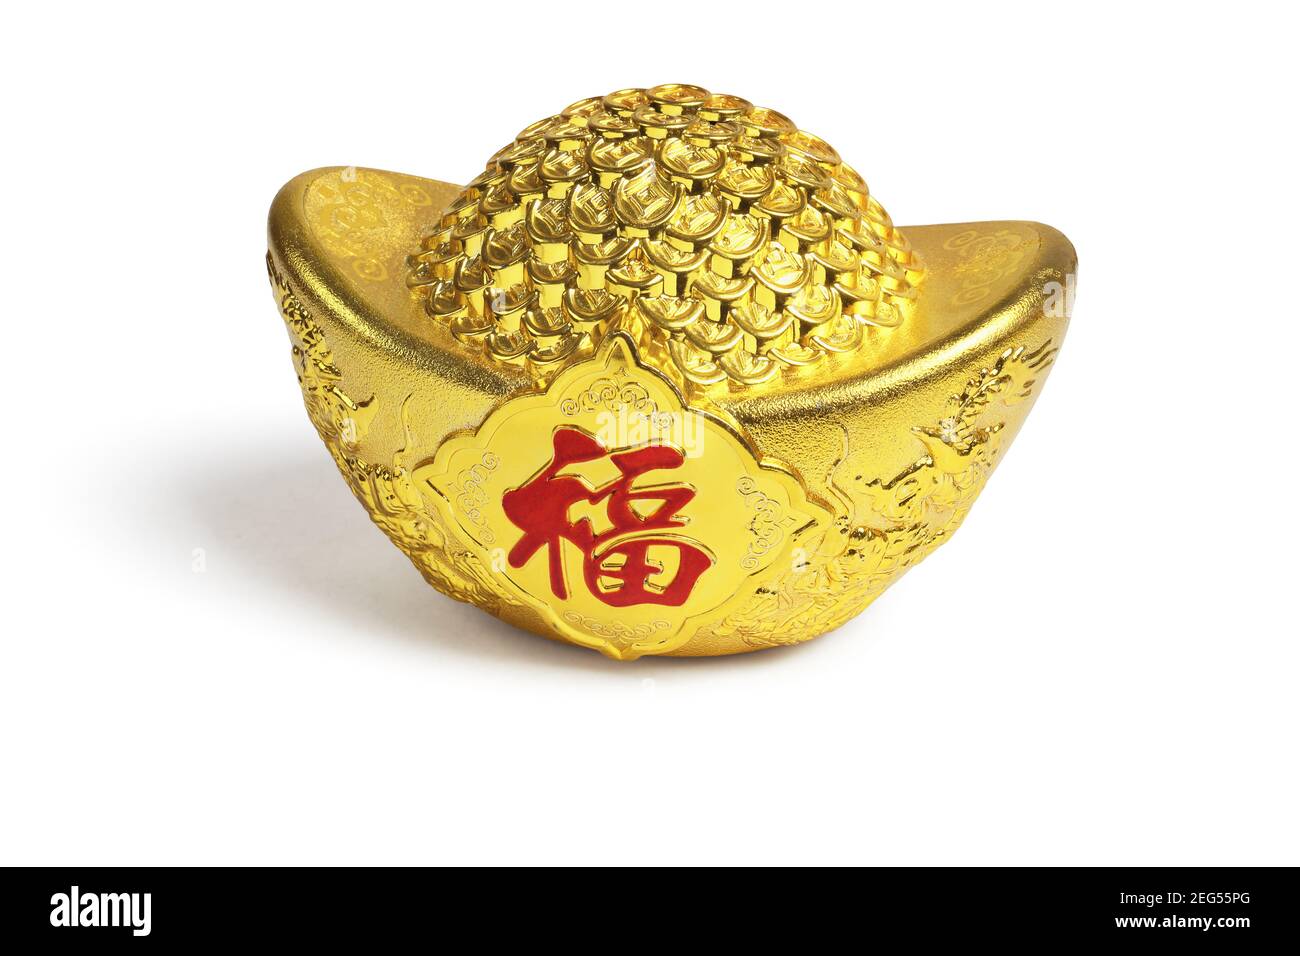 Chinese New Year Gold Ingot Ornament on White Background - translation 'Good Fortune' Stock Photo